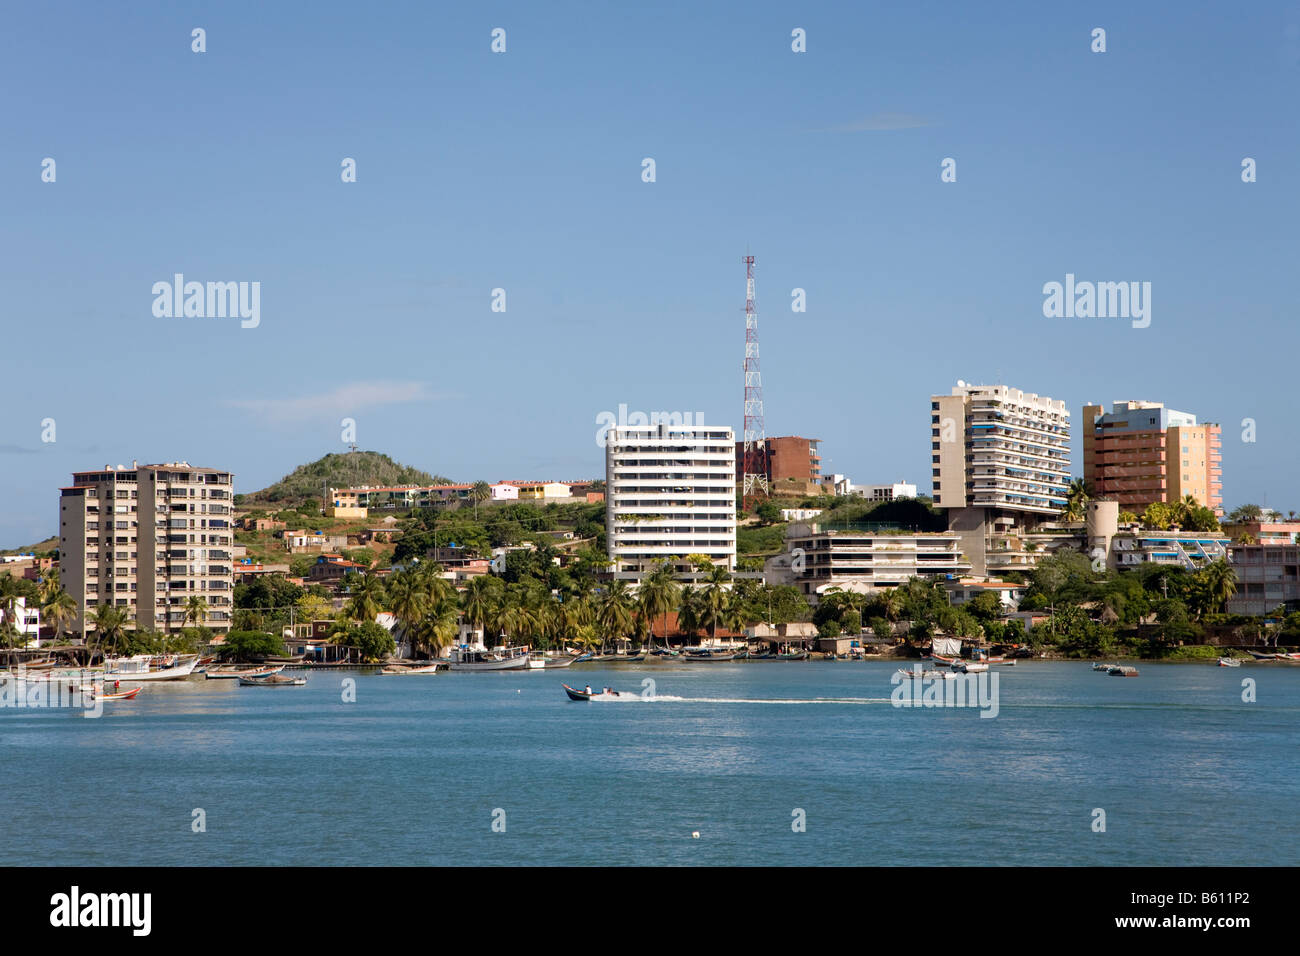 Apartment blocks by the sea, Margarita Island, Caribbean, Venezuela, South America Stock Photo